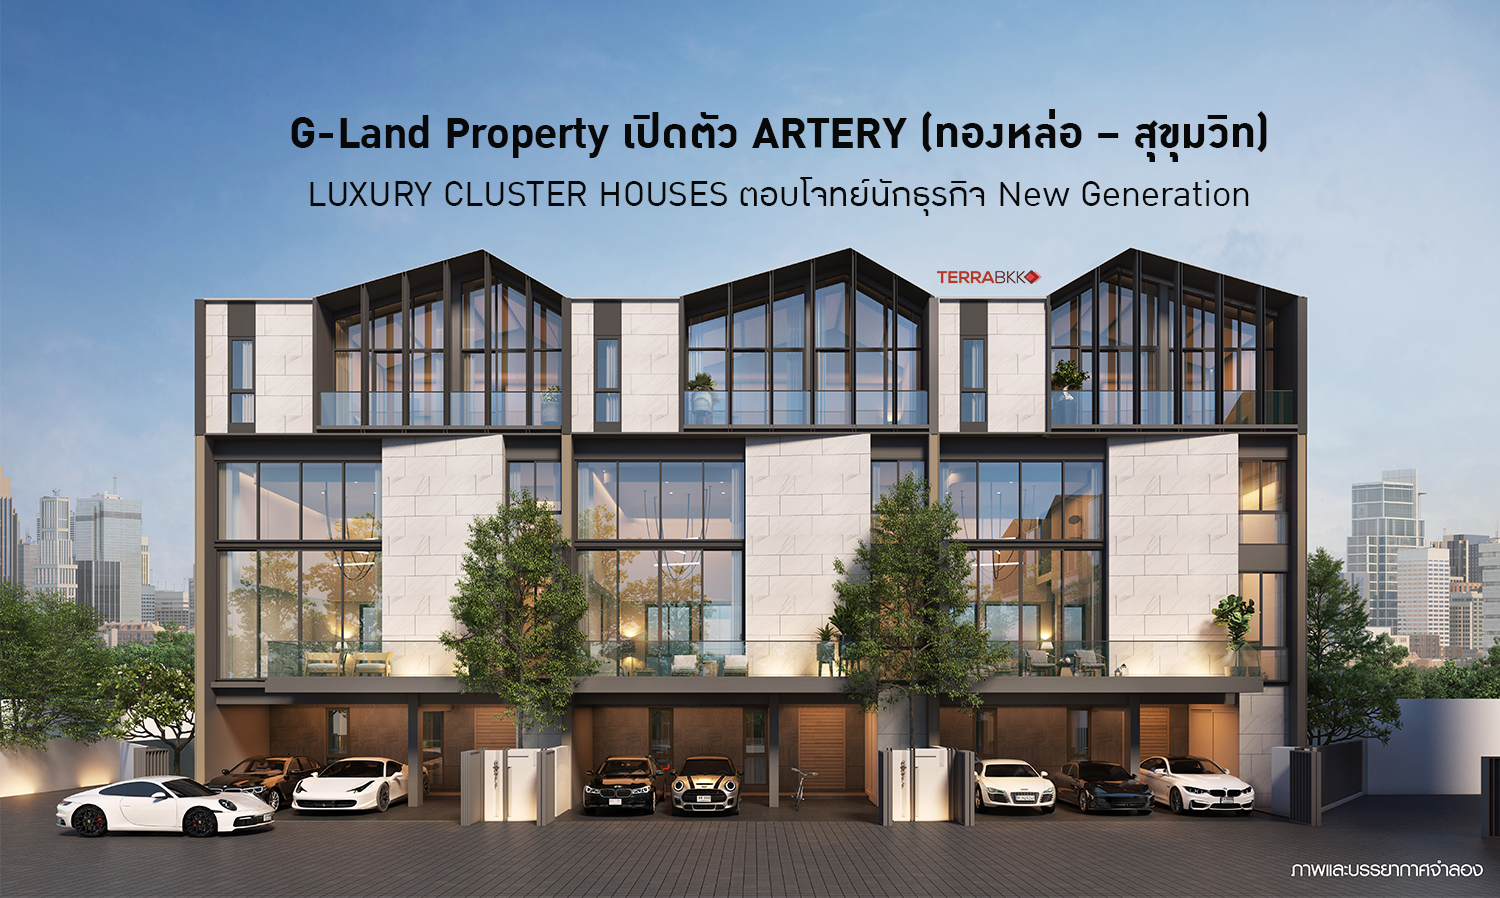 G-Land Property ปักหมุด LUXURY CLUSTER HOUSES ภายใต้ชื่อโครงการ ARTERY (ทองหล่อ – สุขุมวิท) ทำเลย่านธุรกิจ CBD ตอบโจทย์นักธุรกิจ New Generation